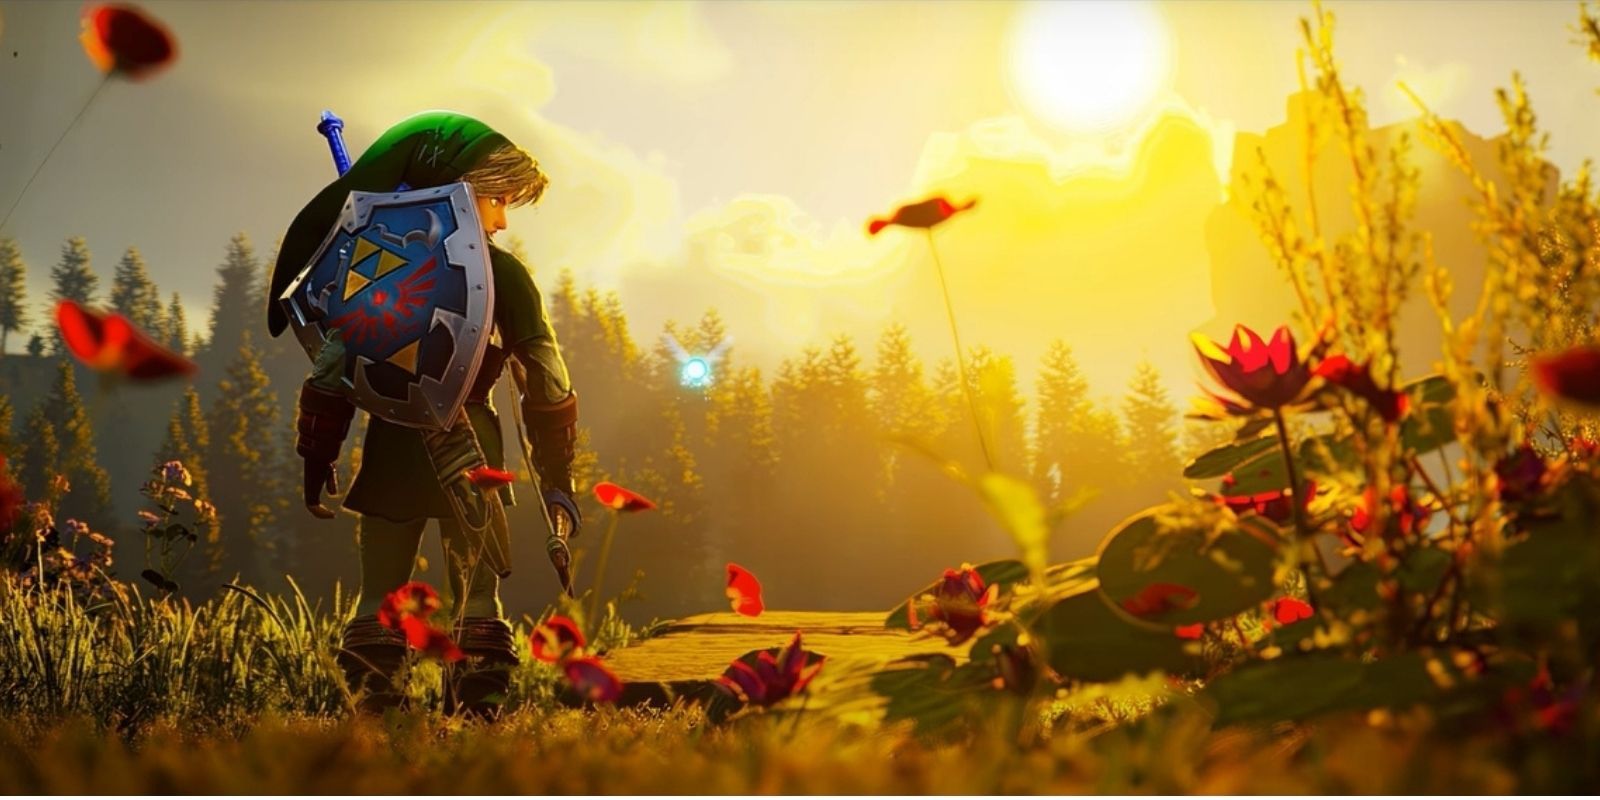 Beautiful Fan Remake of Legend of Zelda: Ocarina of Time Receives New Update